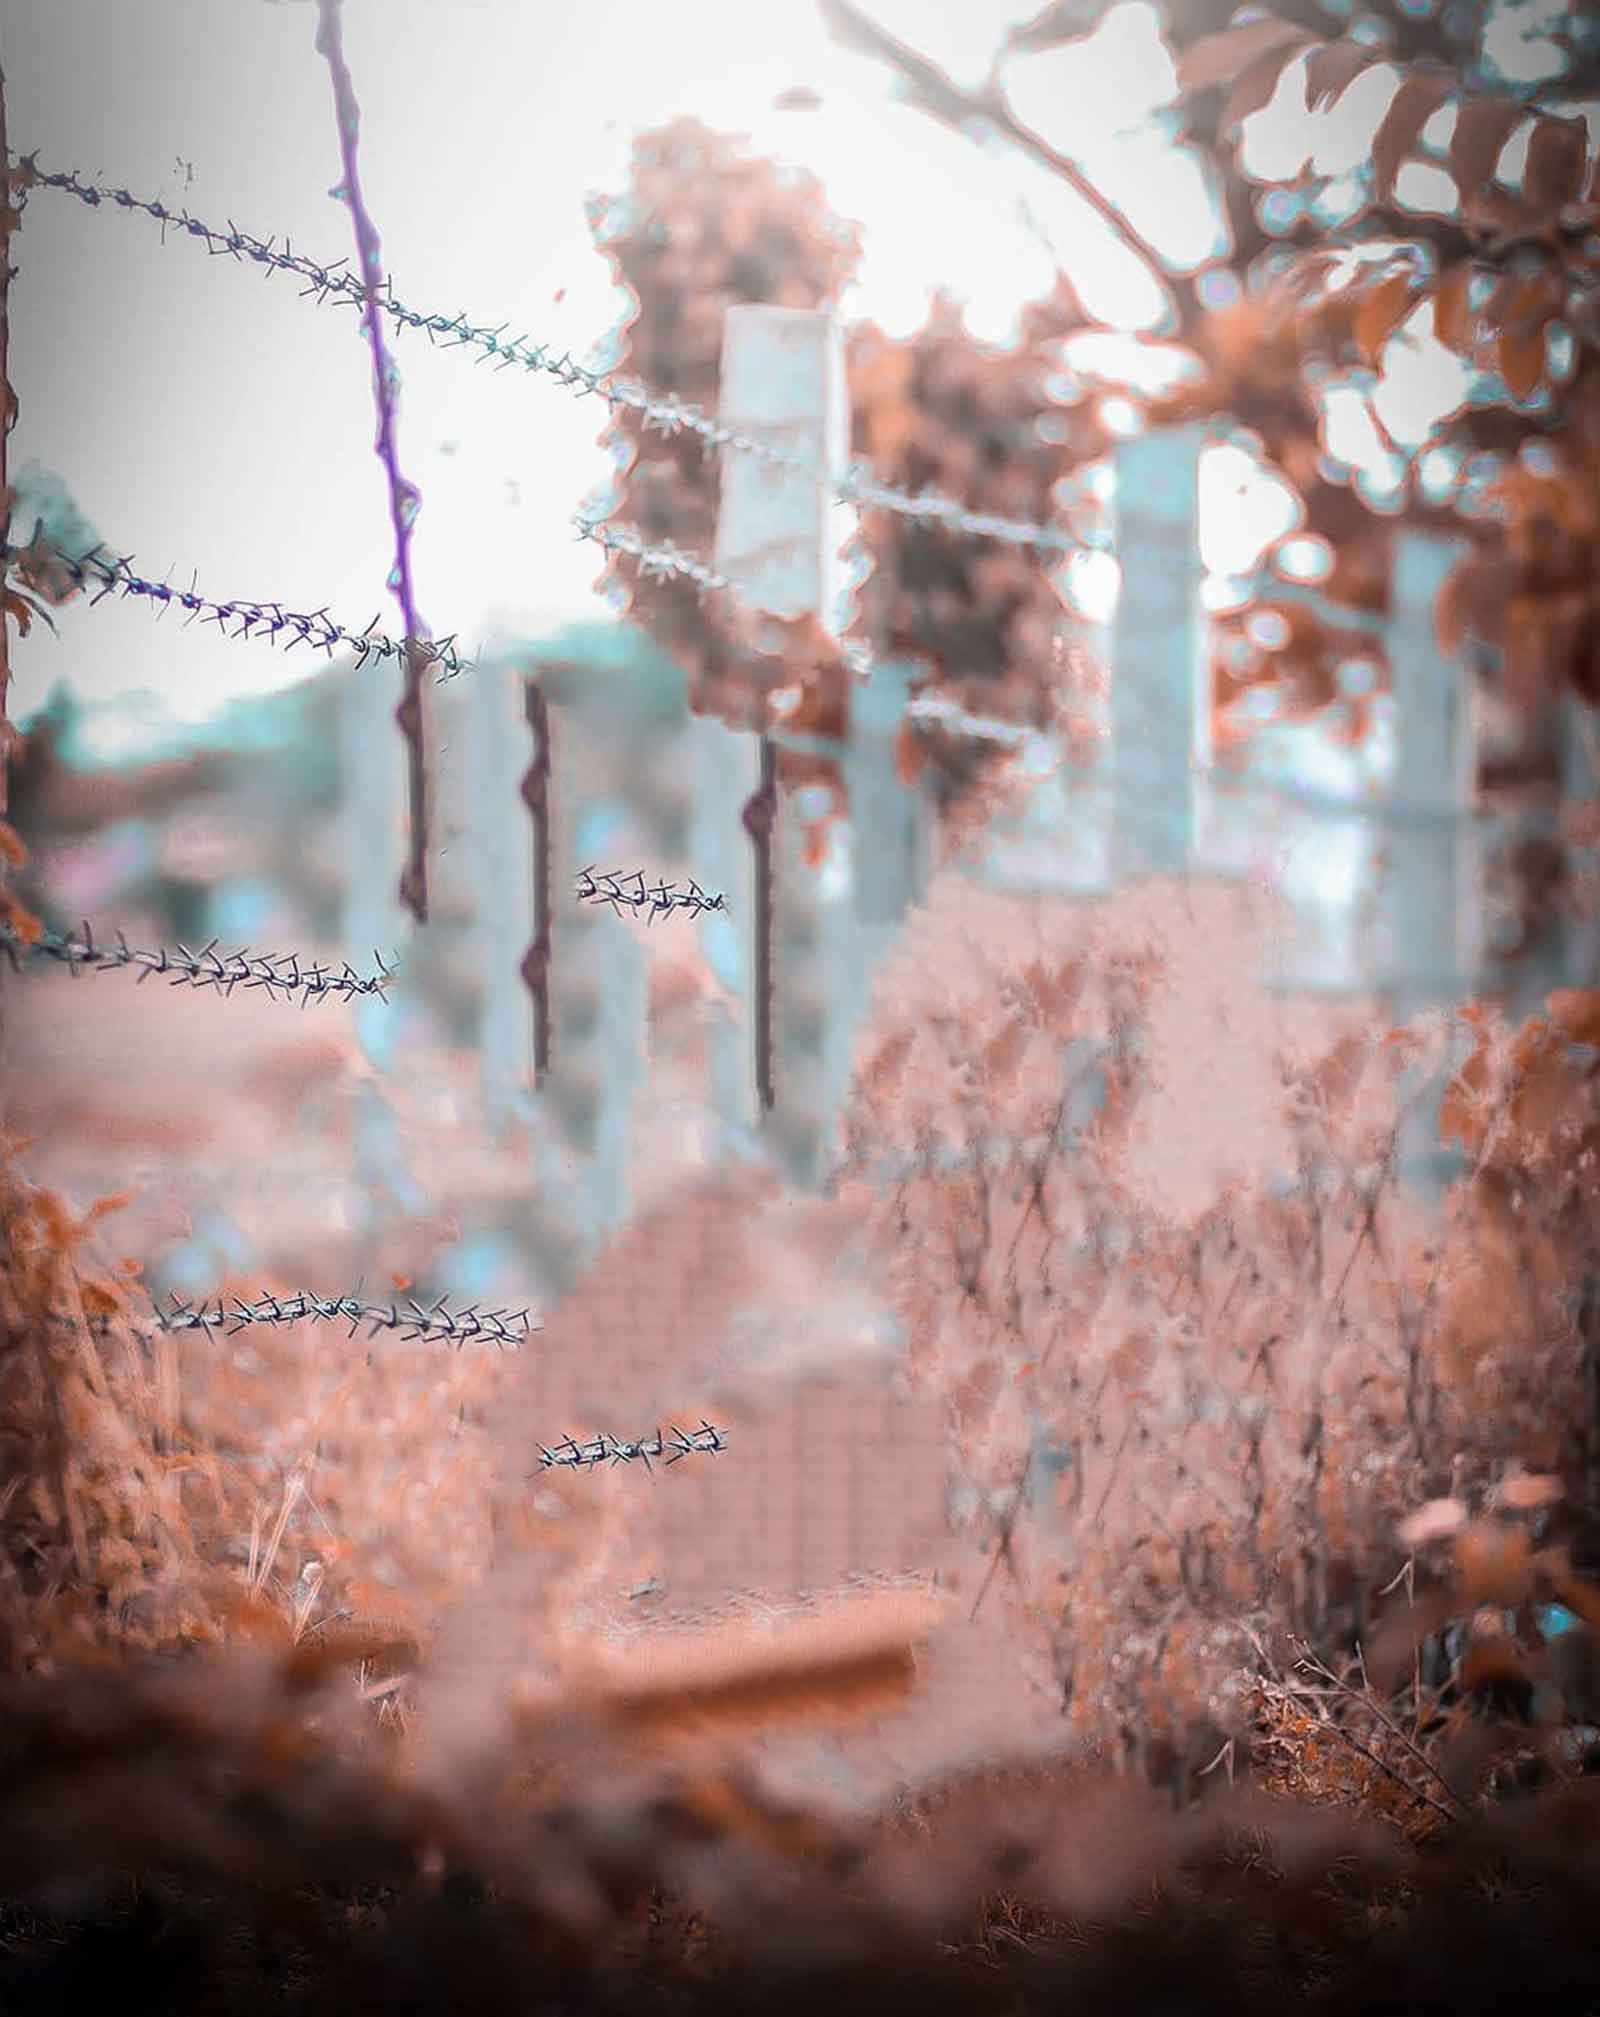 New Orange Tone Blur CB Background Free Stock Photo